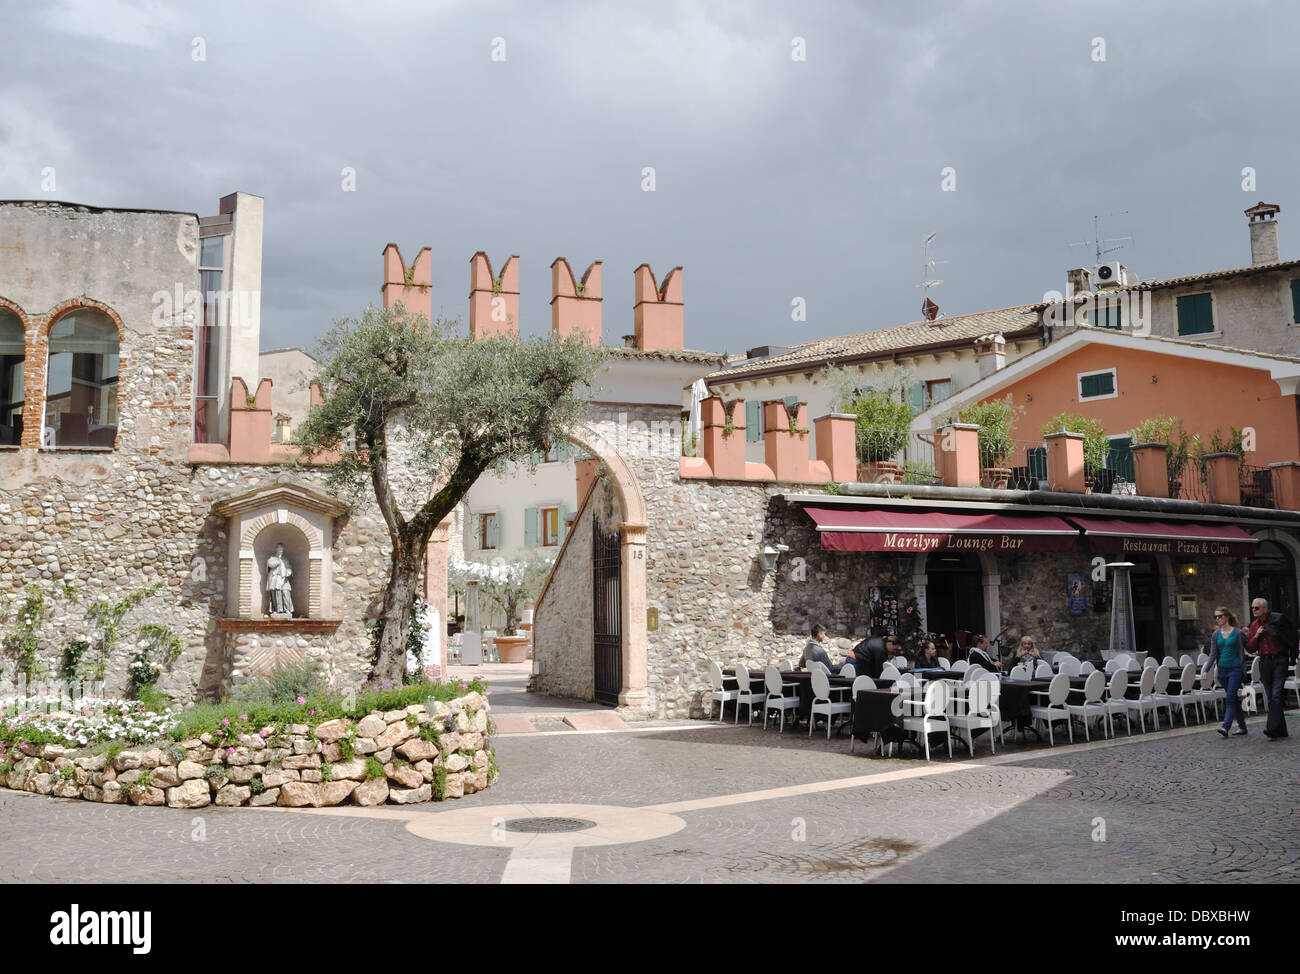 The Marilyn Lounge Bar Restaurant and Club in Bardolino, on Lake Garda. Stock Photo